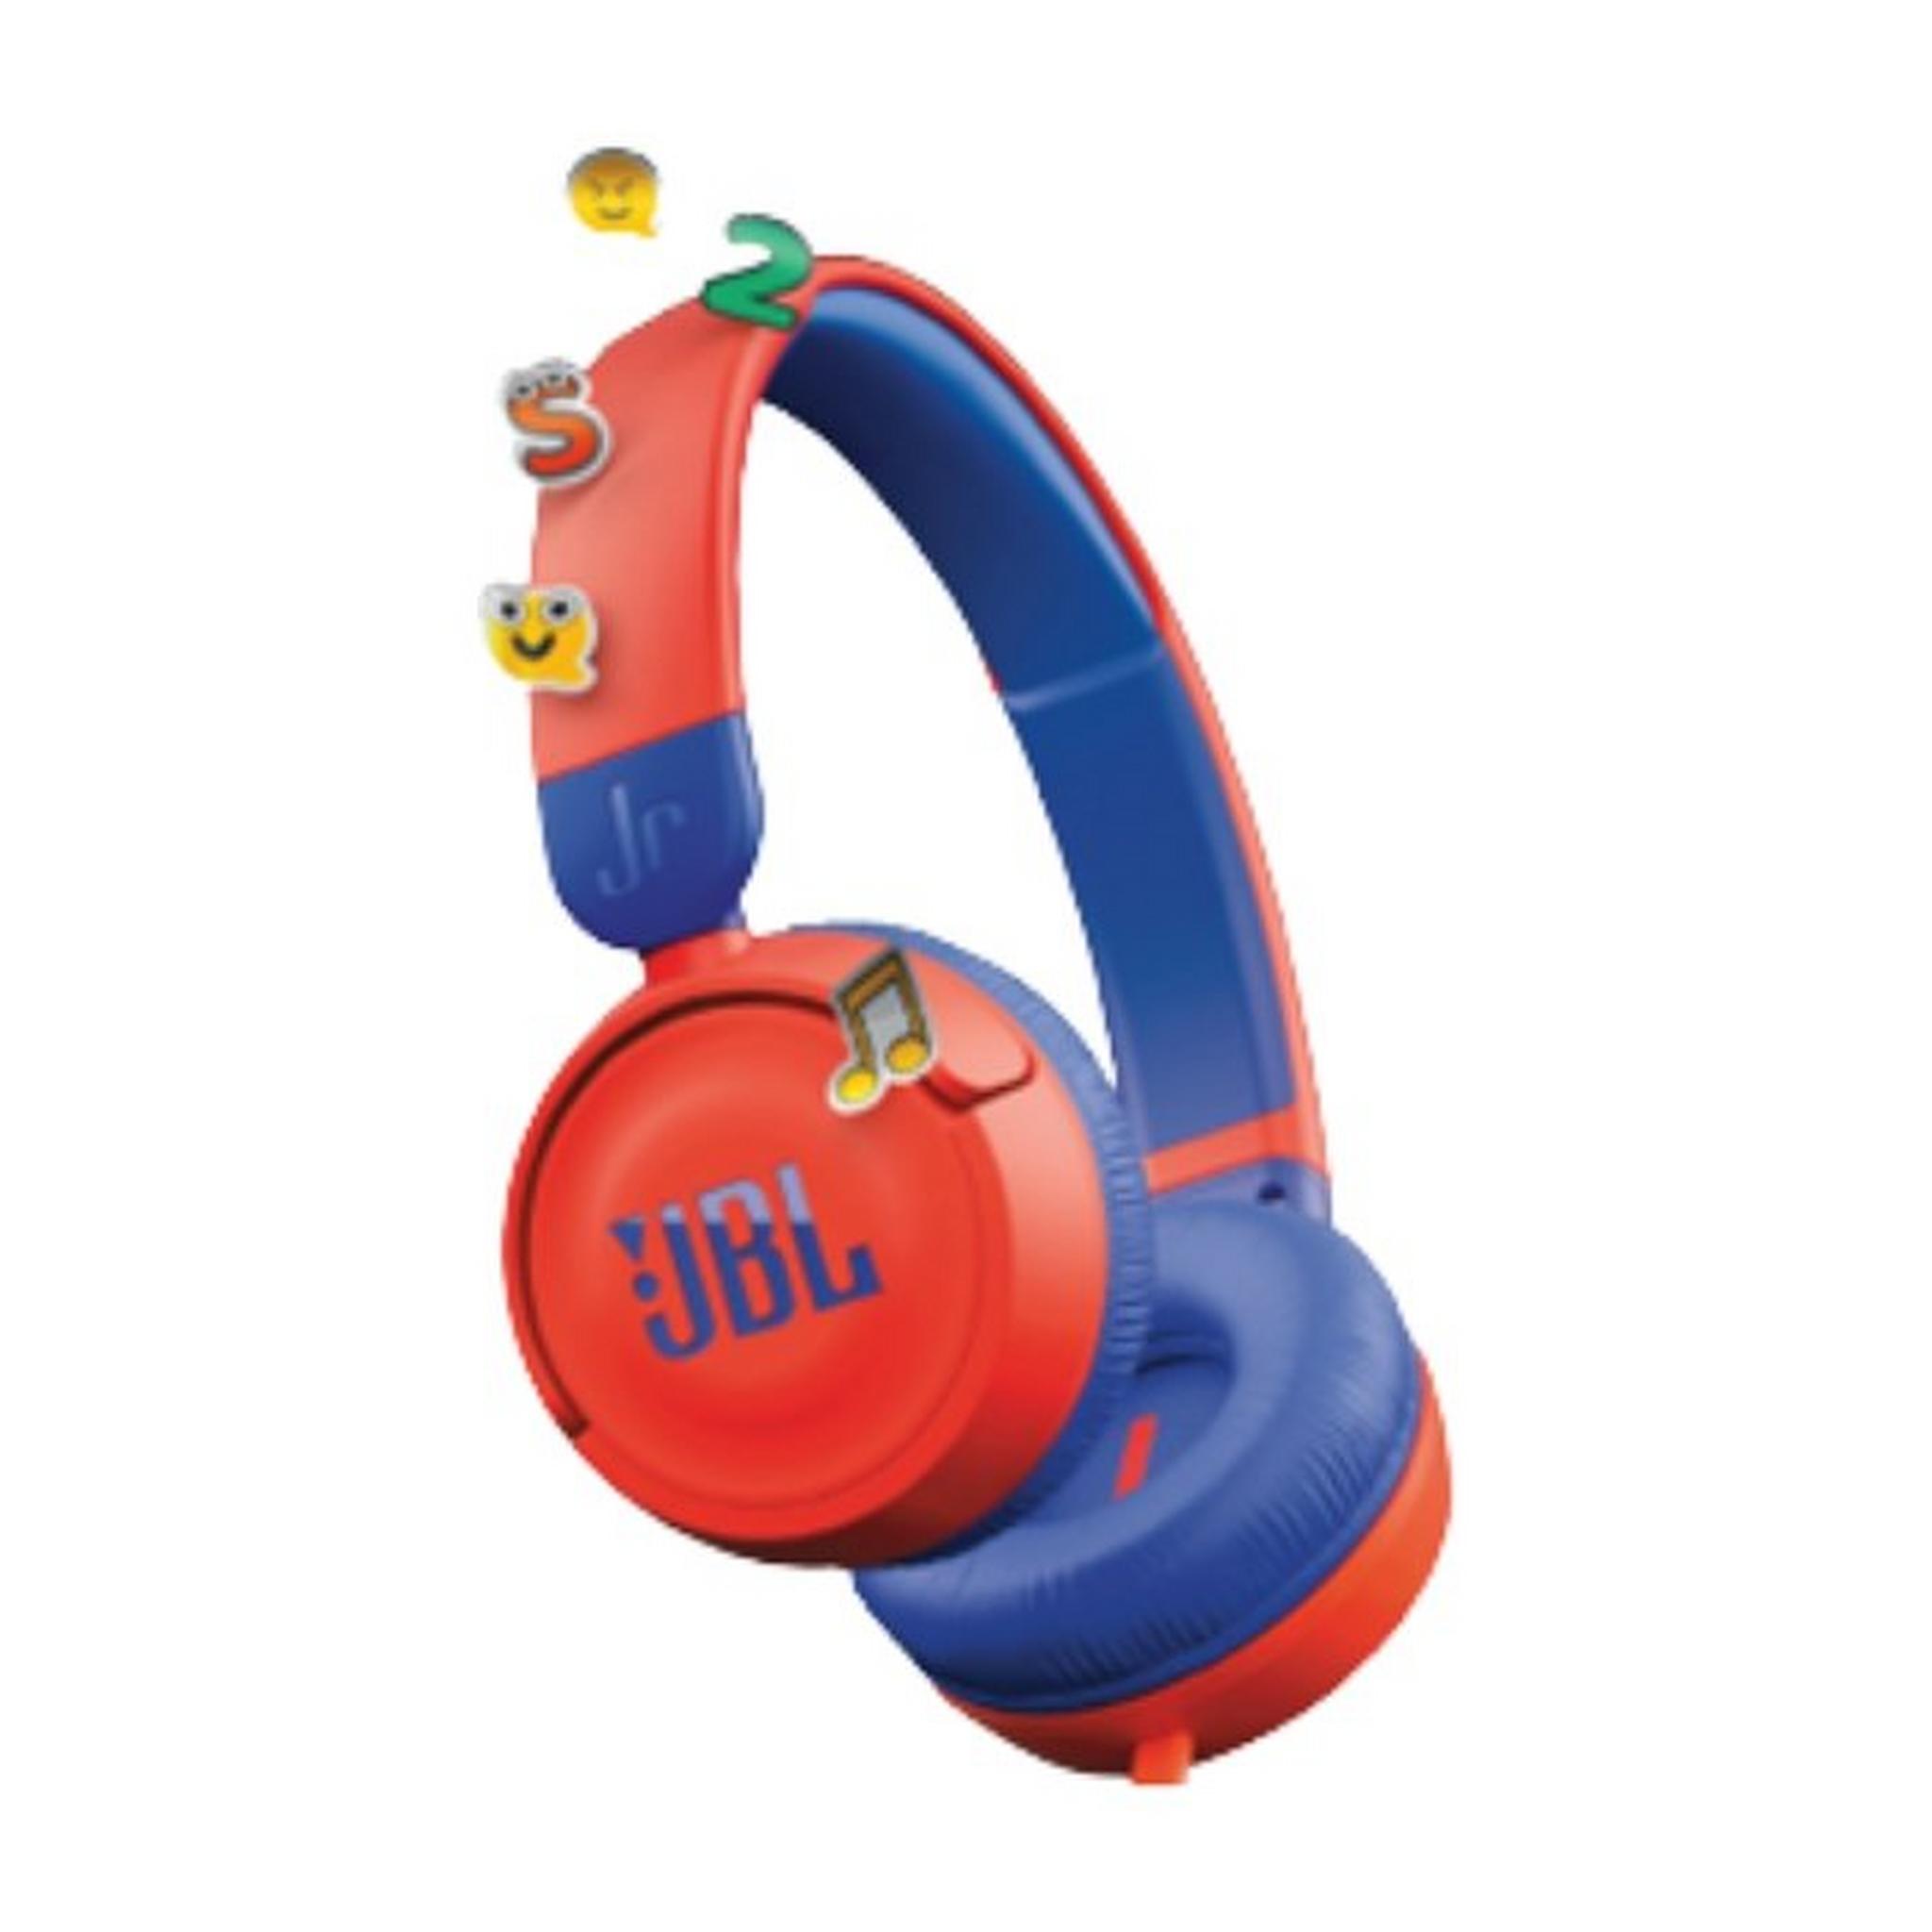 JBL Kids Wireless Headphones (JR310BT) - Red